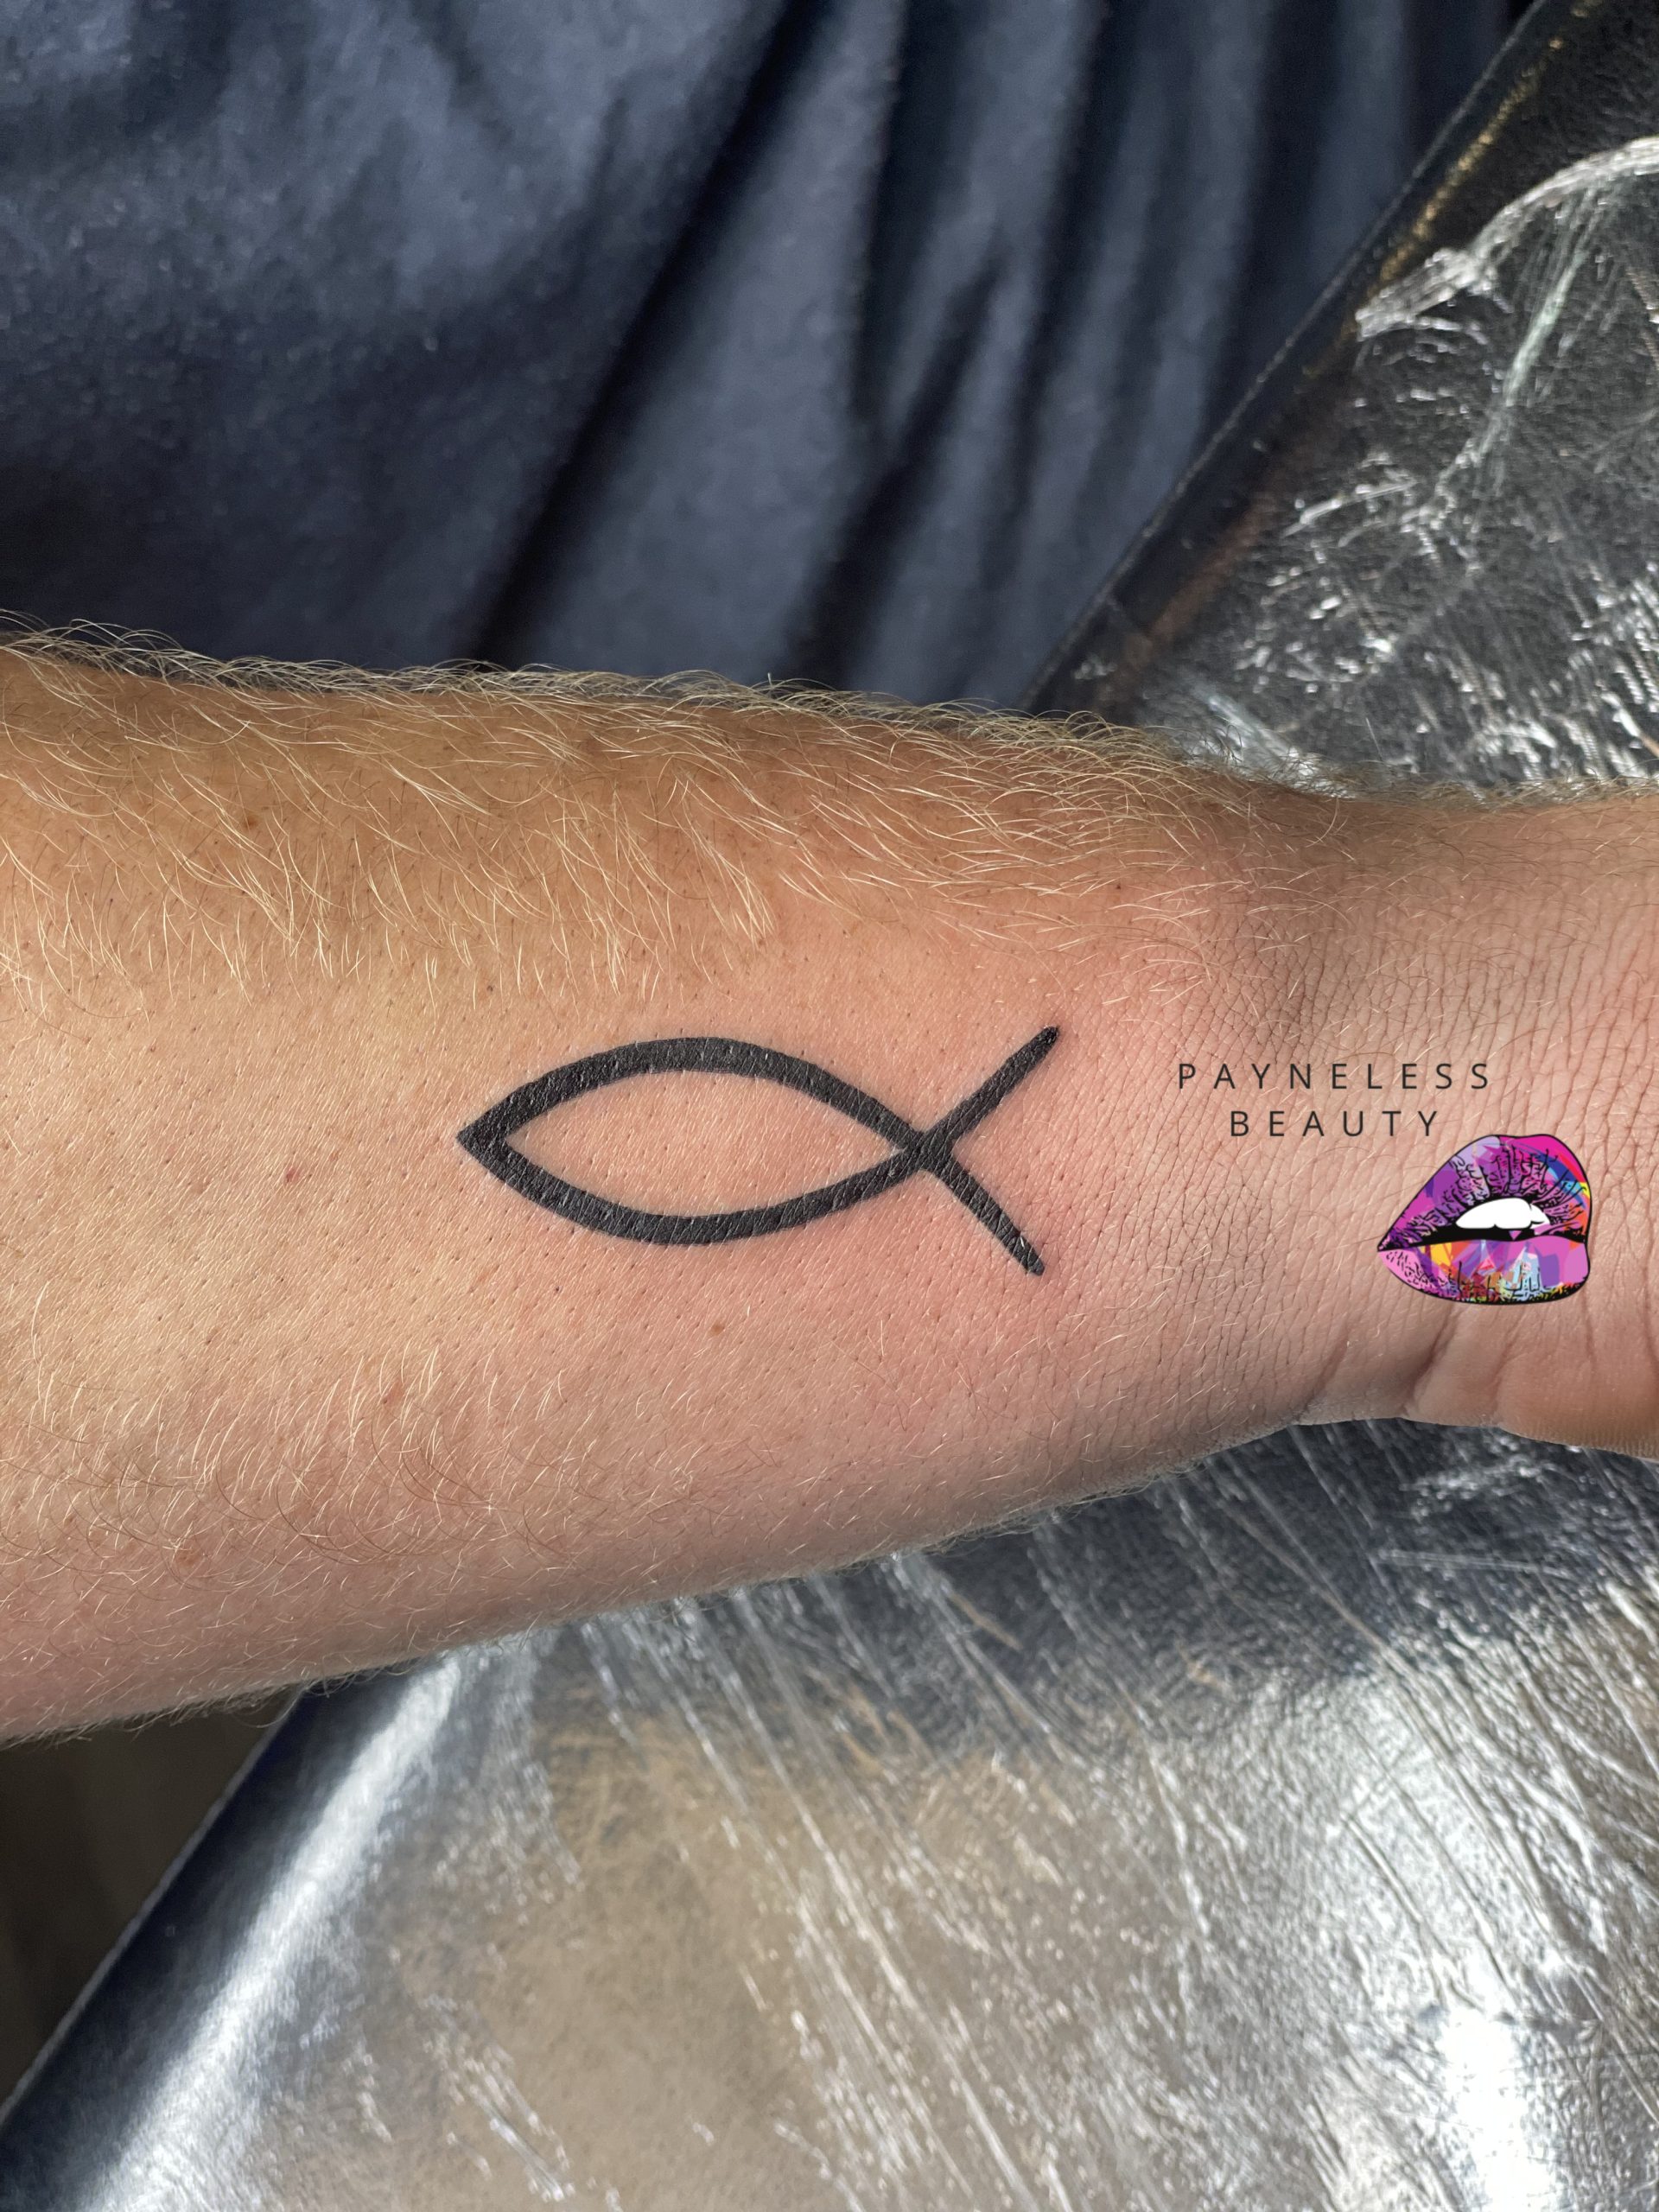 Tattoo uploaded by Nik Firestarter • Some Jesus fish from March 2018.  http://nikkifirestarter.com #tattoos #bodyart #bodymods #blacktattoos  #graphictattoos #religioustattoos #fish #jesus • Tattoodo